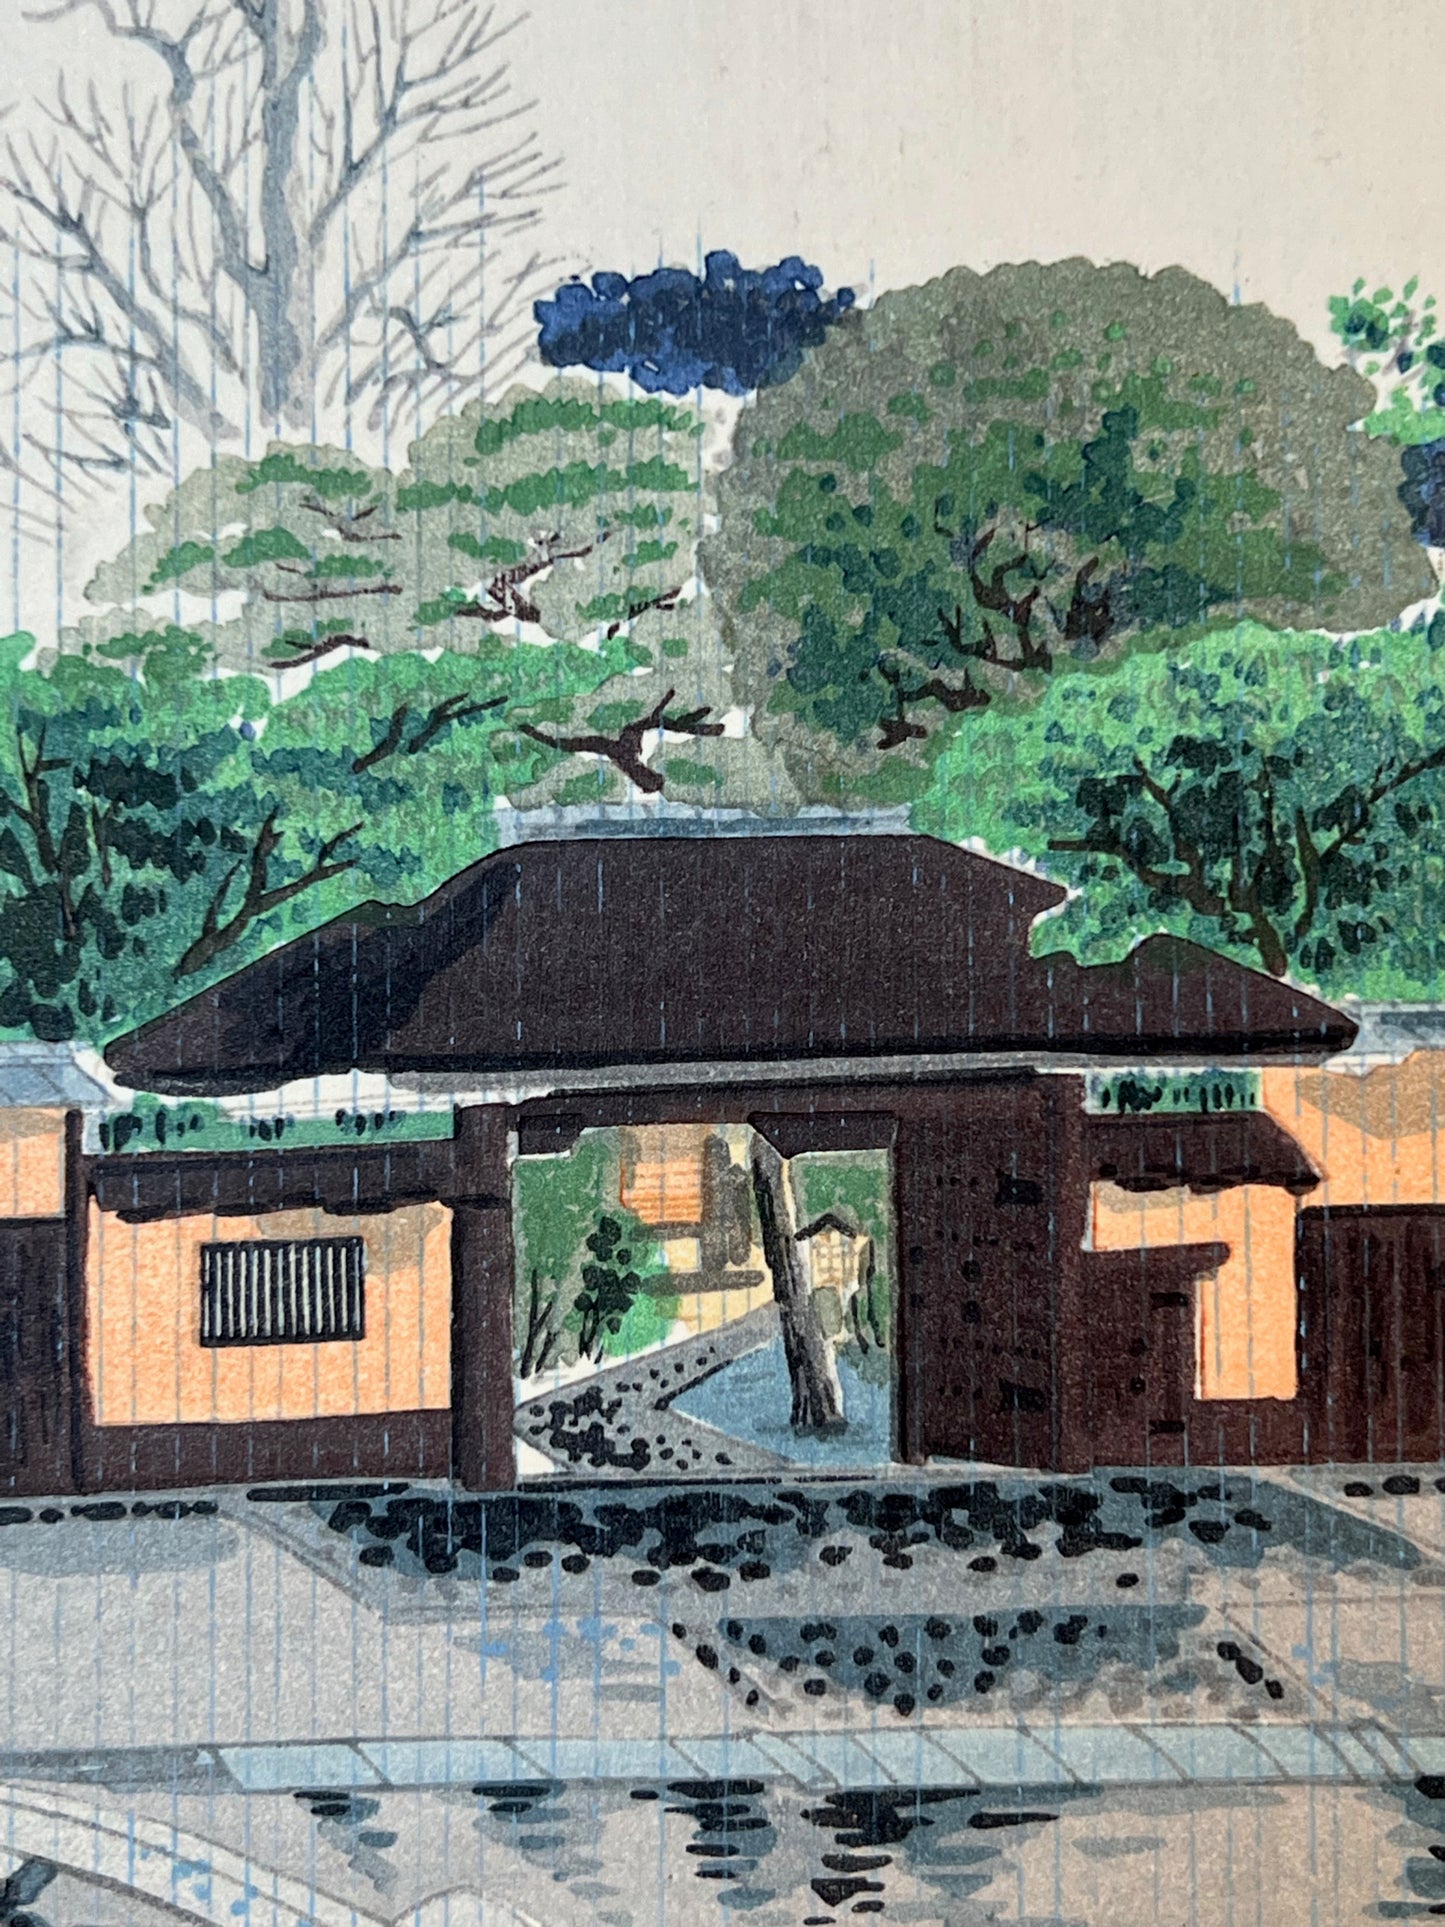 Estampe Japonaise de Tokuriki Tomikichiro | Série des 12 mois à Kyoto, juin,sado senke porte entrée